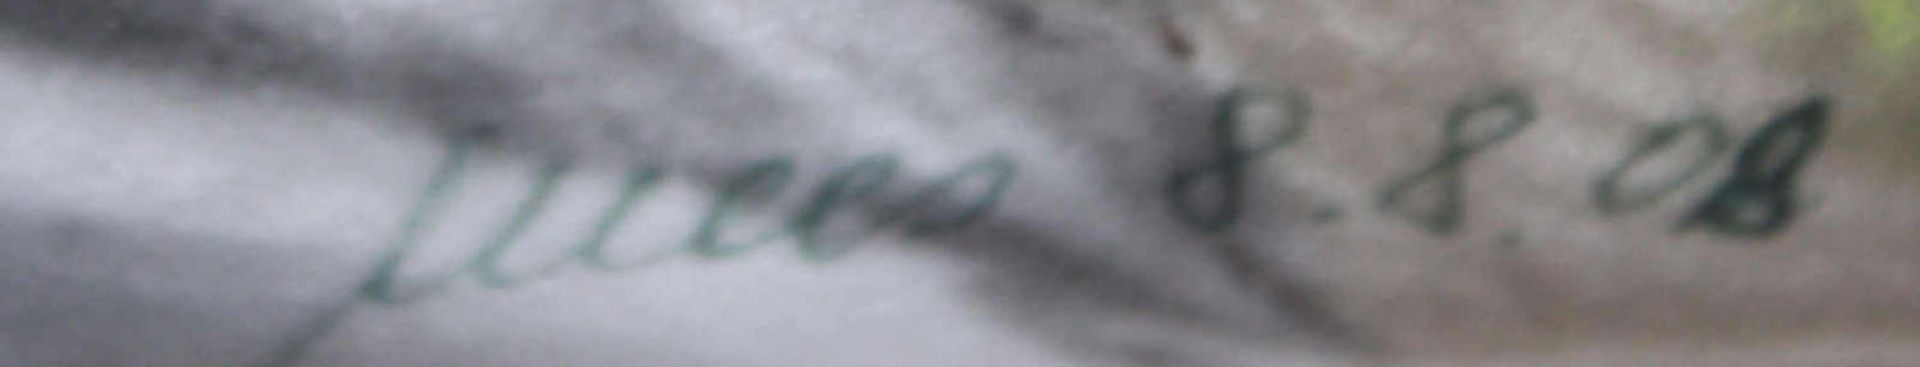 Mees, Aquarell auf Papier "Toreingang", hinter Glas gerahmt. Rechts unten Signatur Mees 08.8.88. - Image 2 of 3